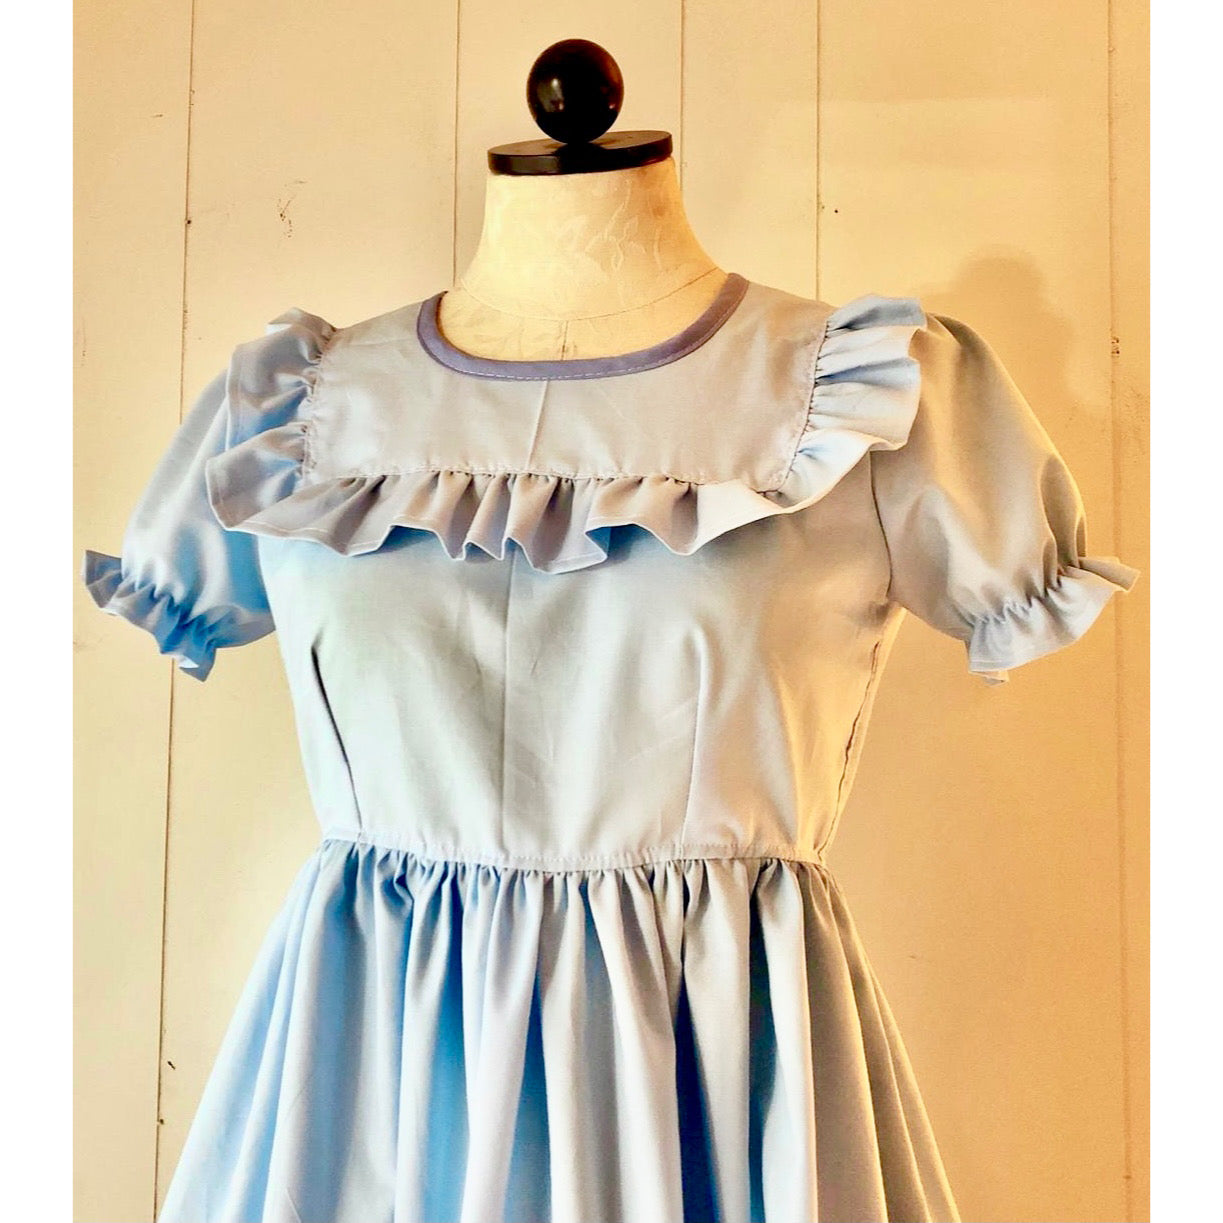 The Short Sleeve Savannah Dress in Baby Blue